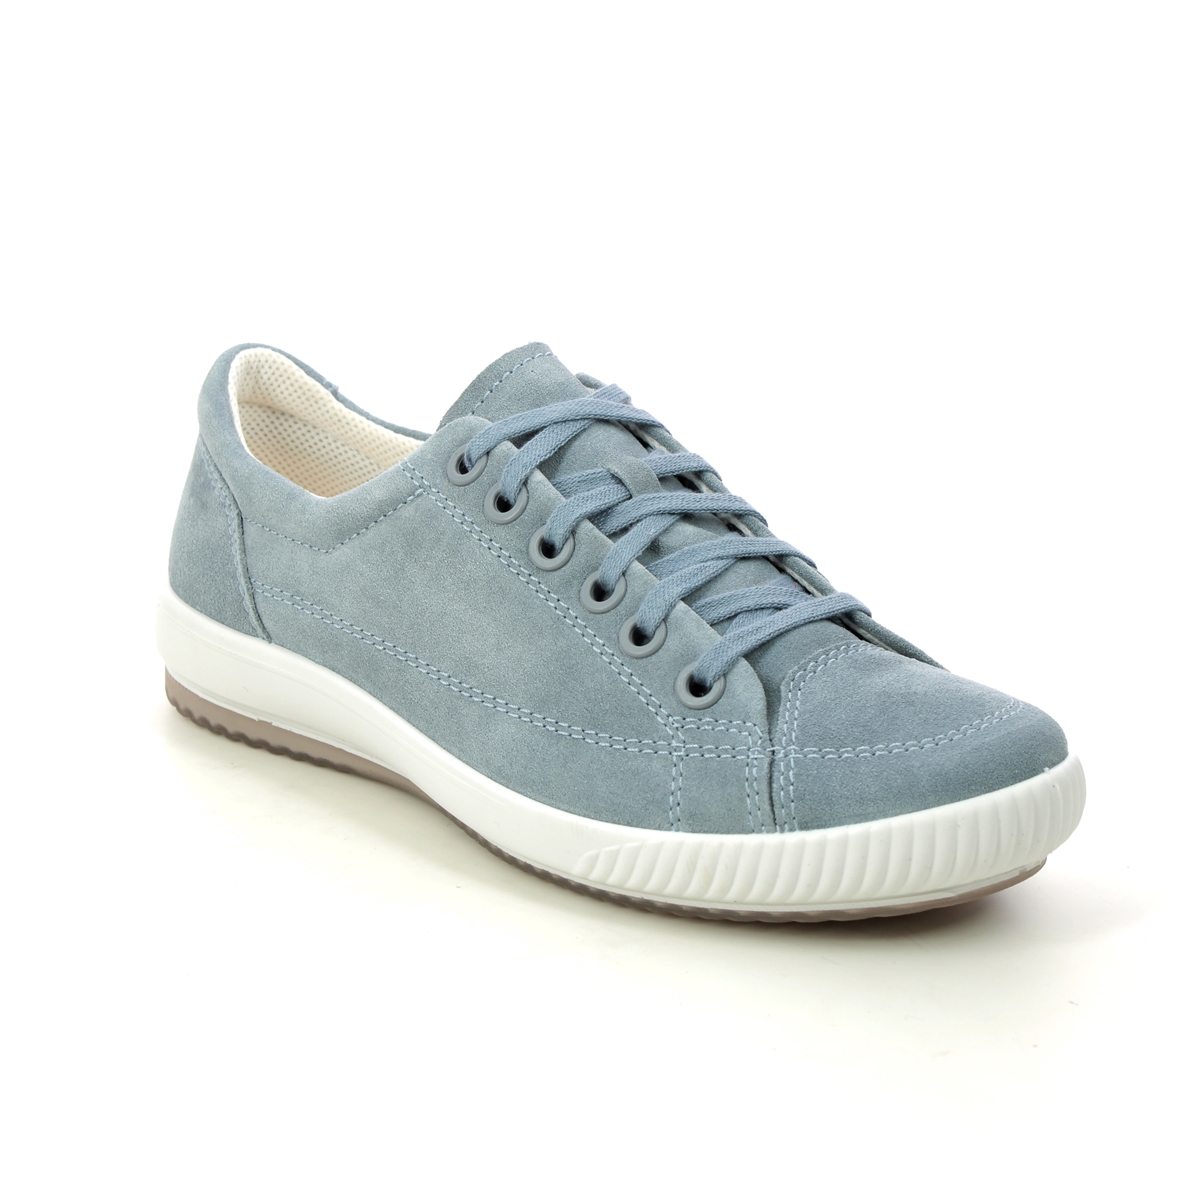 Legero Tanaro 5 Stitch Blue Grey Womens Lacing Shoes 2000161-8500 In Size 7 In Plain Blue Grey